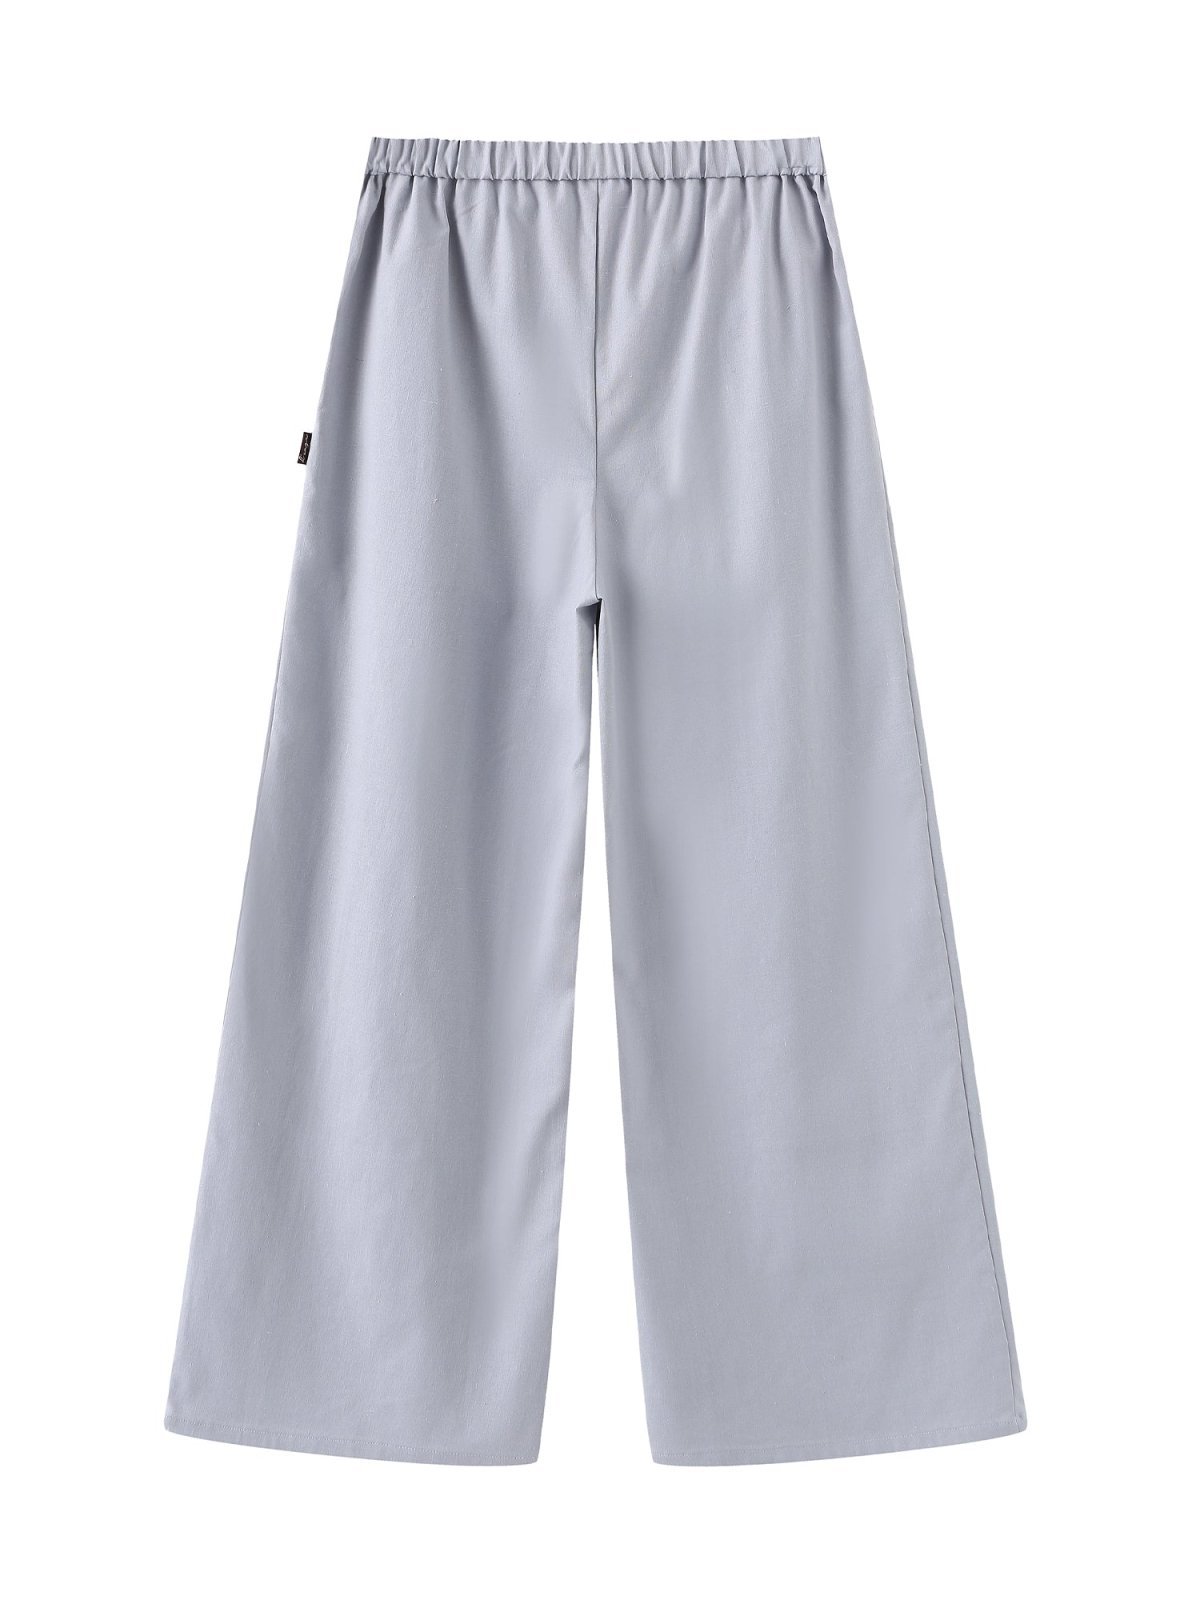 Riley Tie Waist Linen Pants - DAG-DD9535-22IndigoS - Baby Blue - S - D'zage Designs